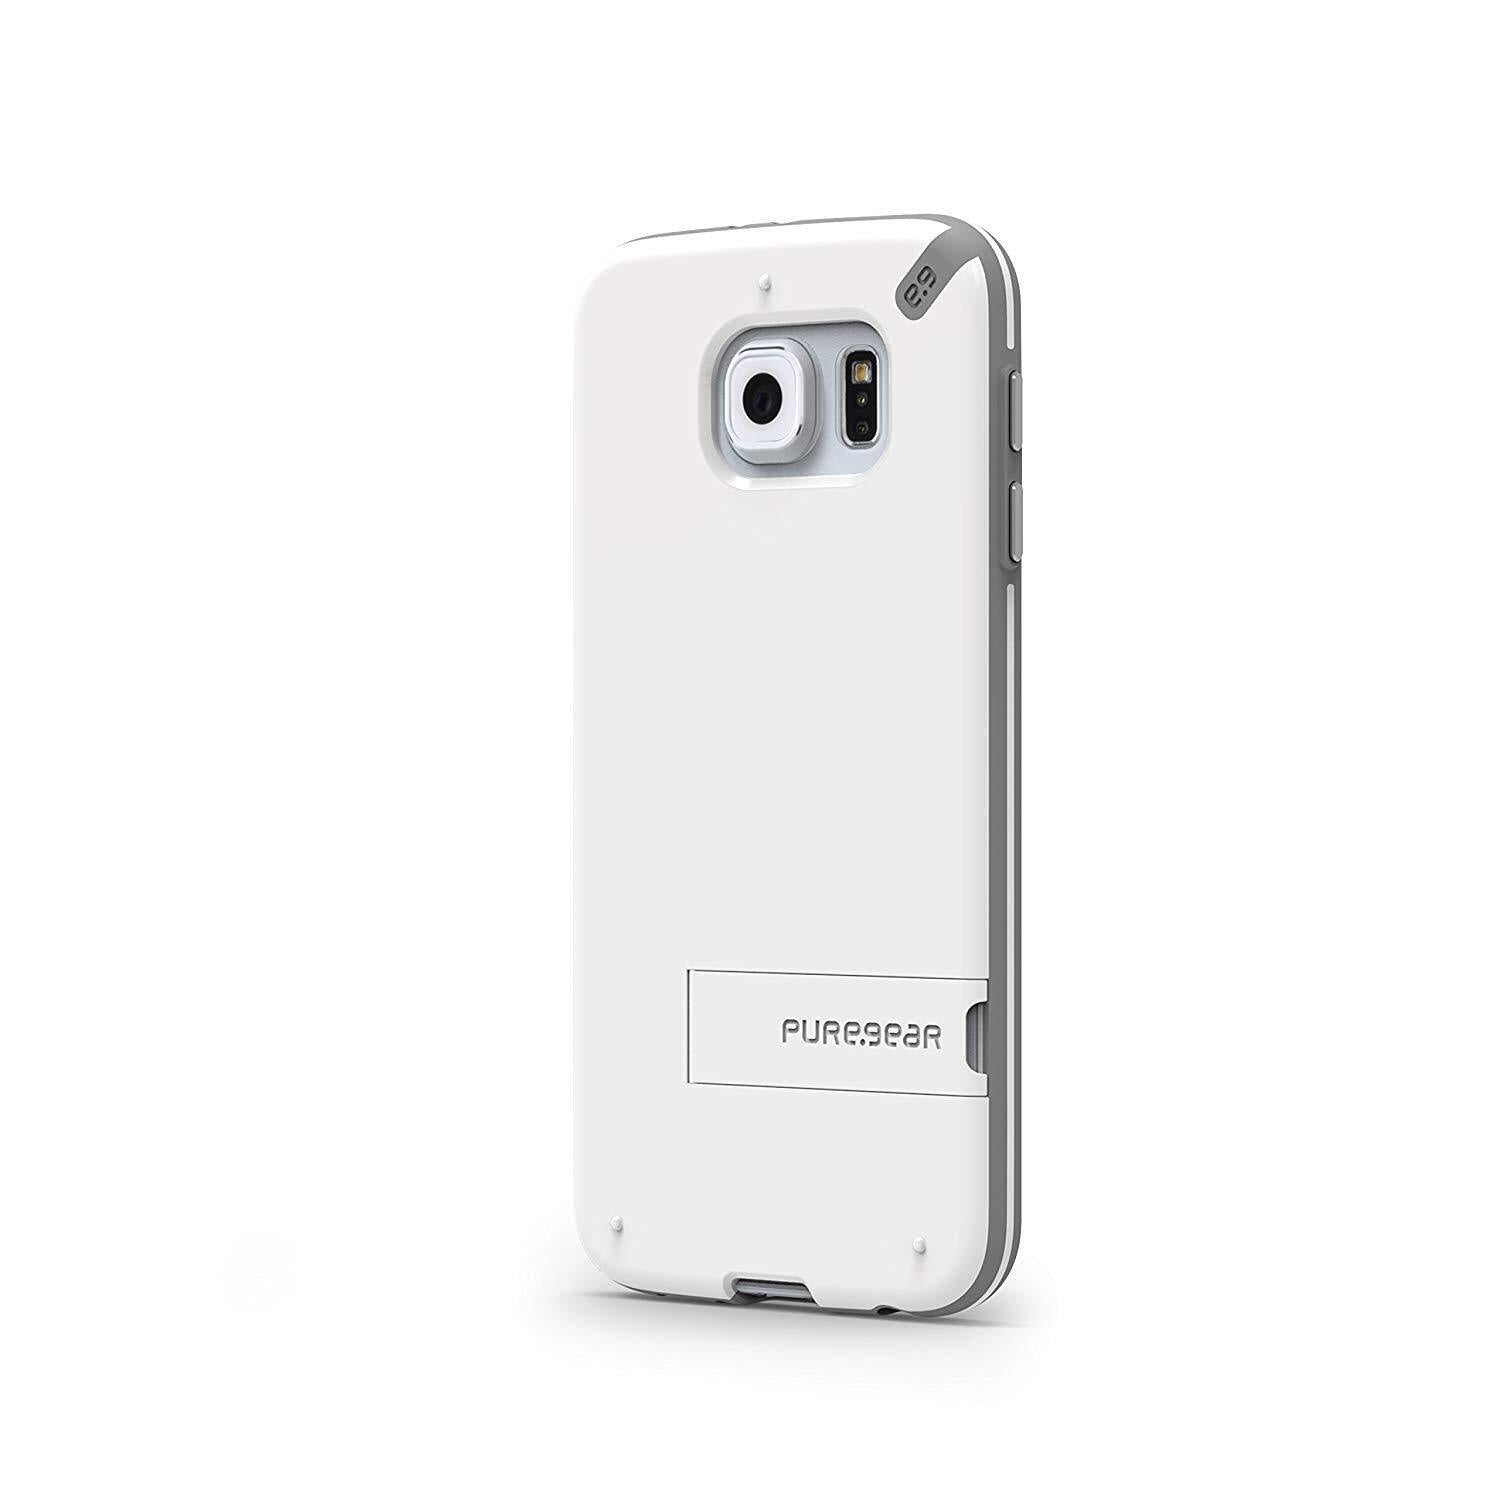 Samsung Galaxy S6 PureGear Slim Shell Case - White/Gray